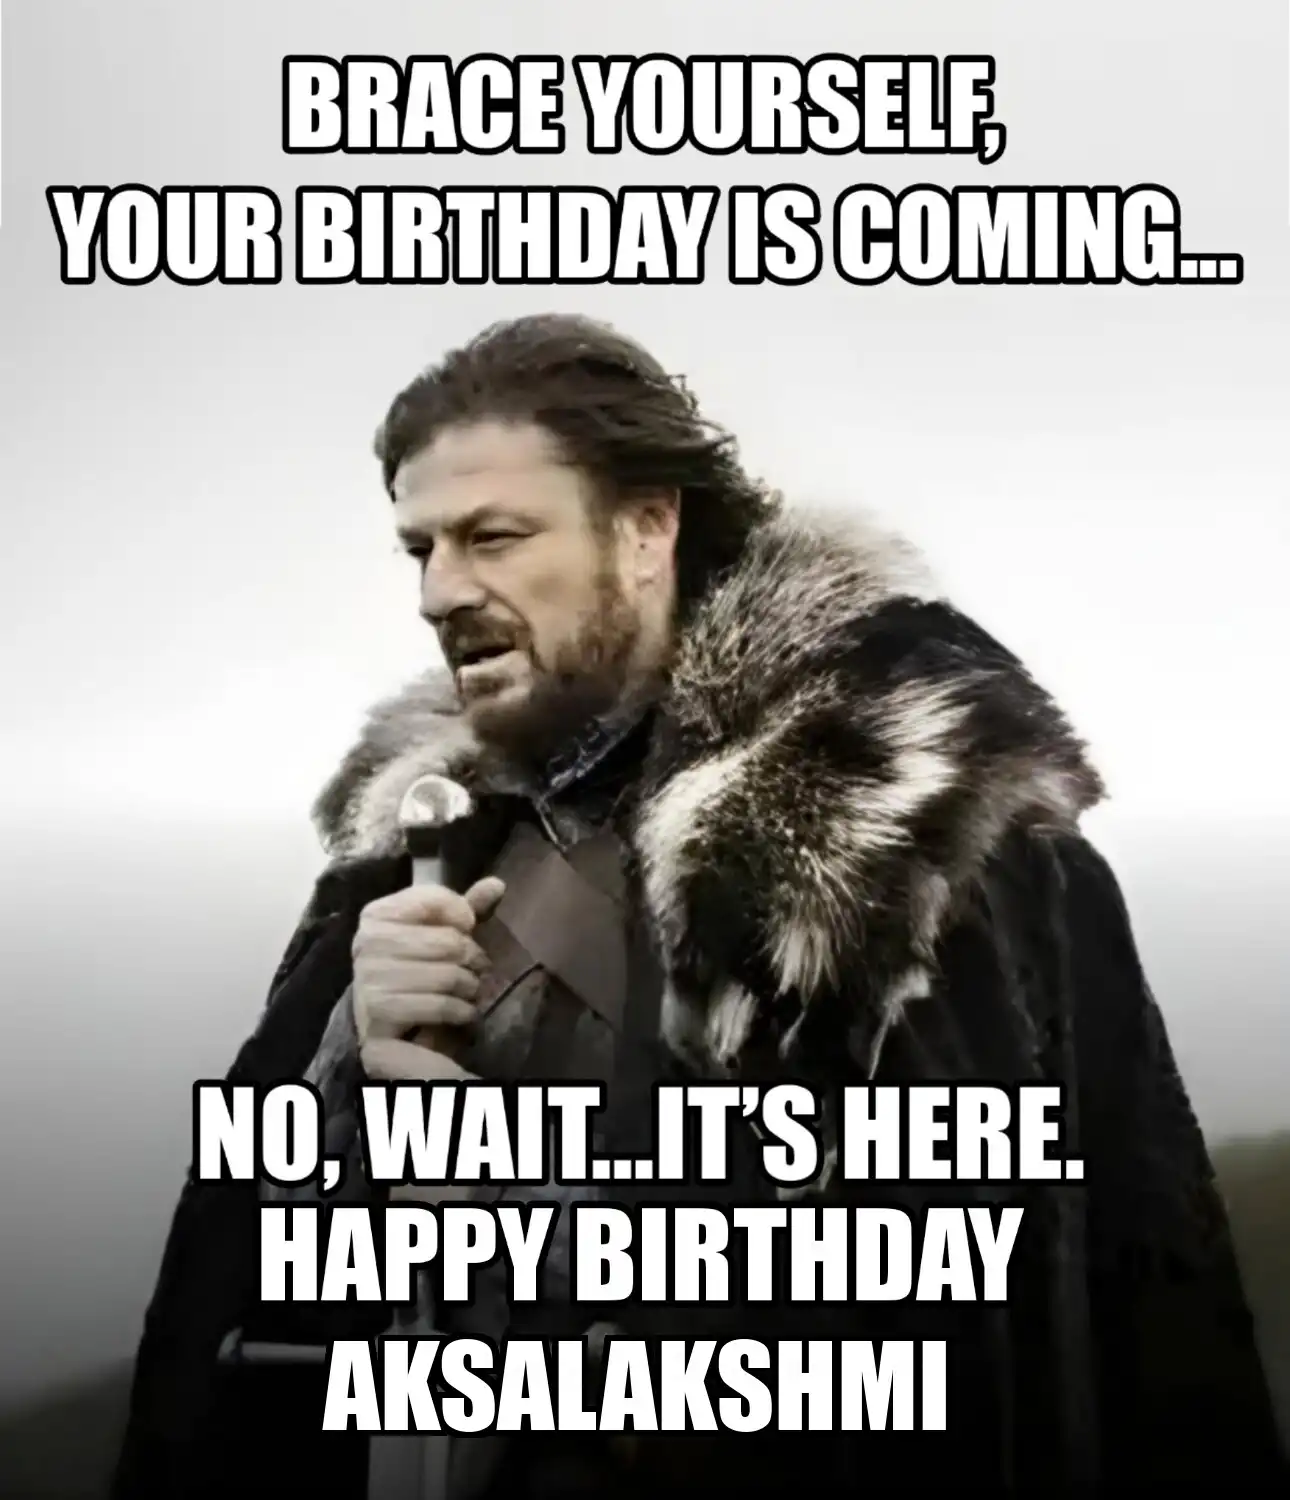 Happy Birthday Aksalakshmi Brace Yourself Your Birthday Is Coming Meme